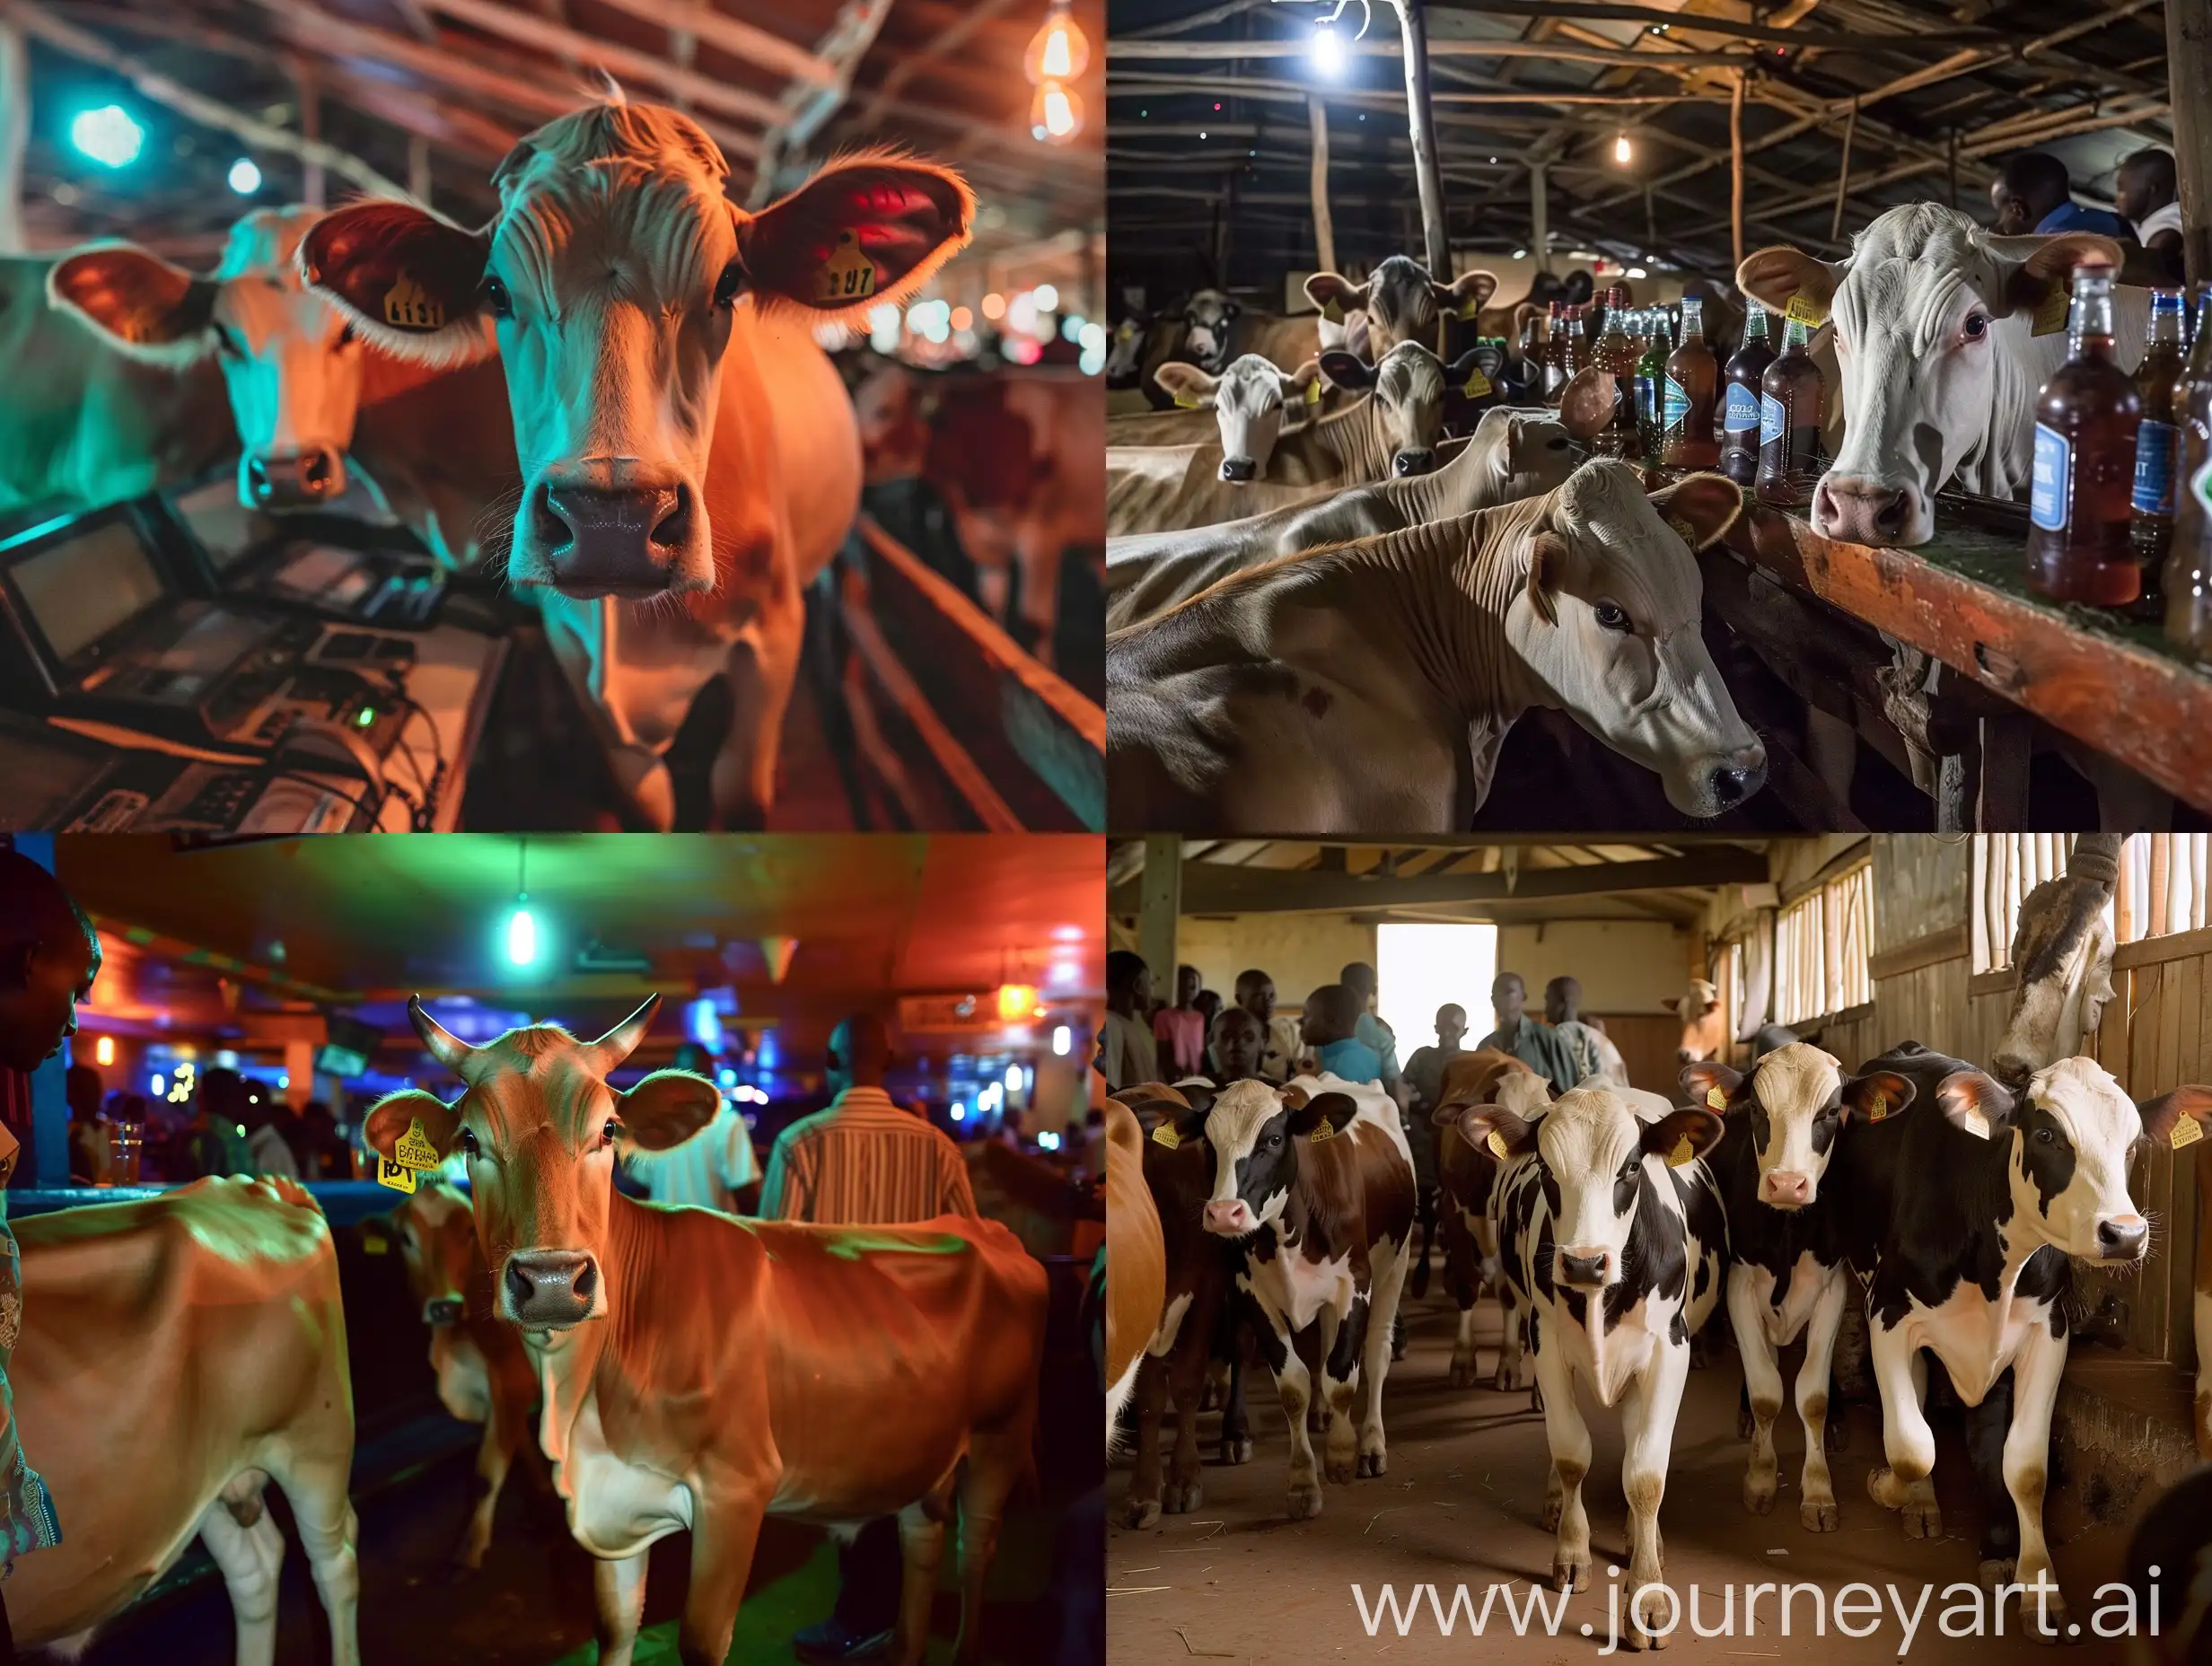 Cows in a night club in kenya


